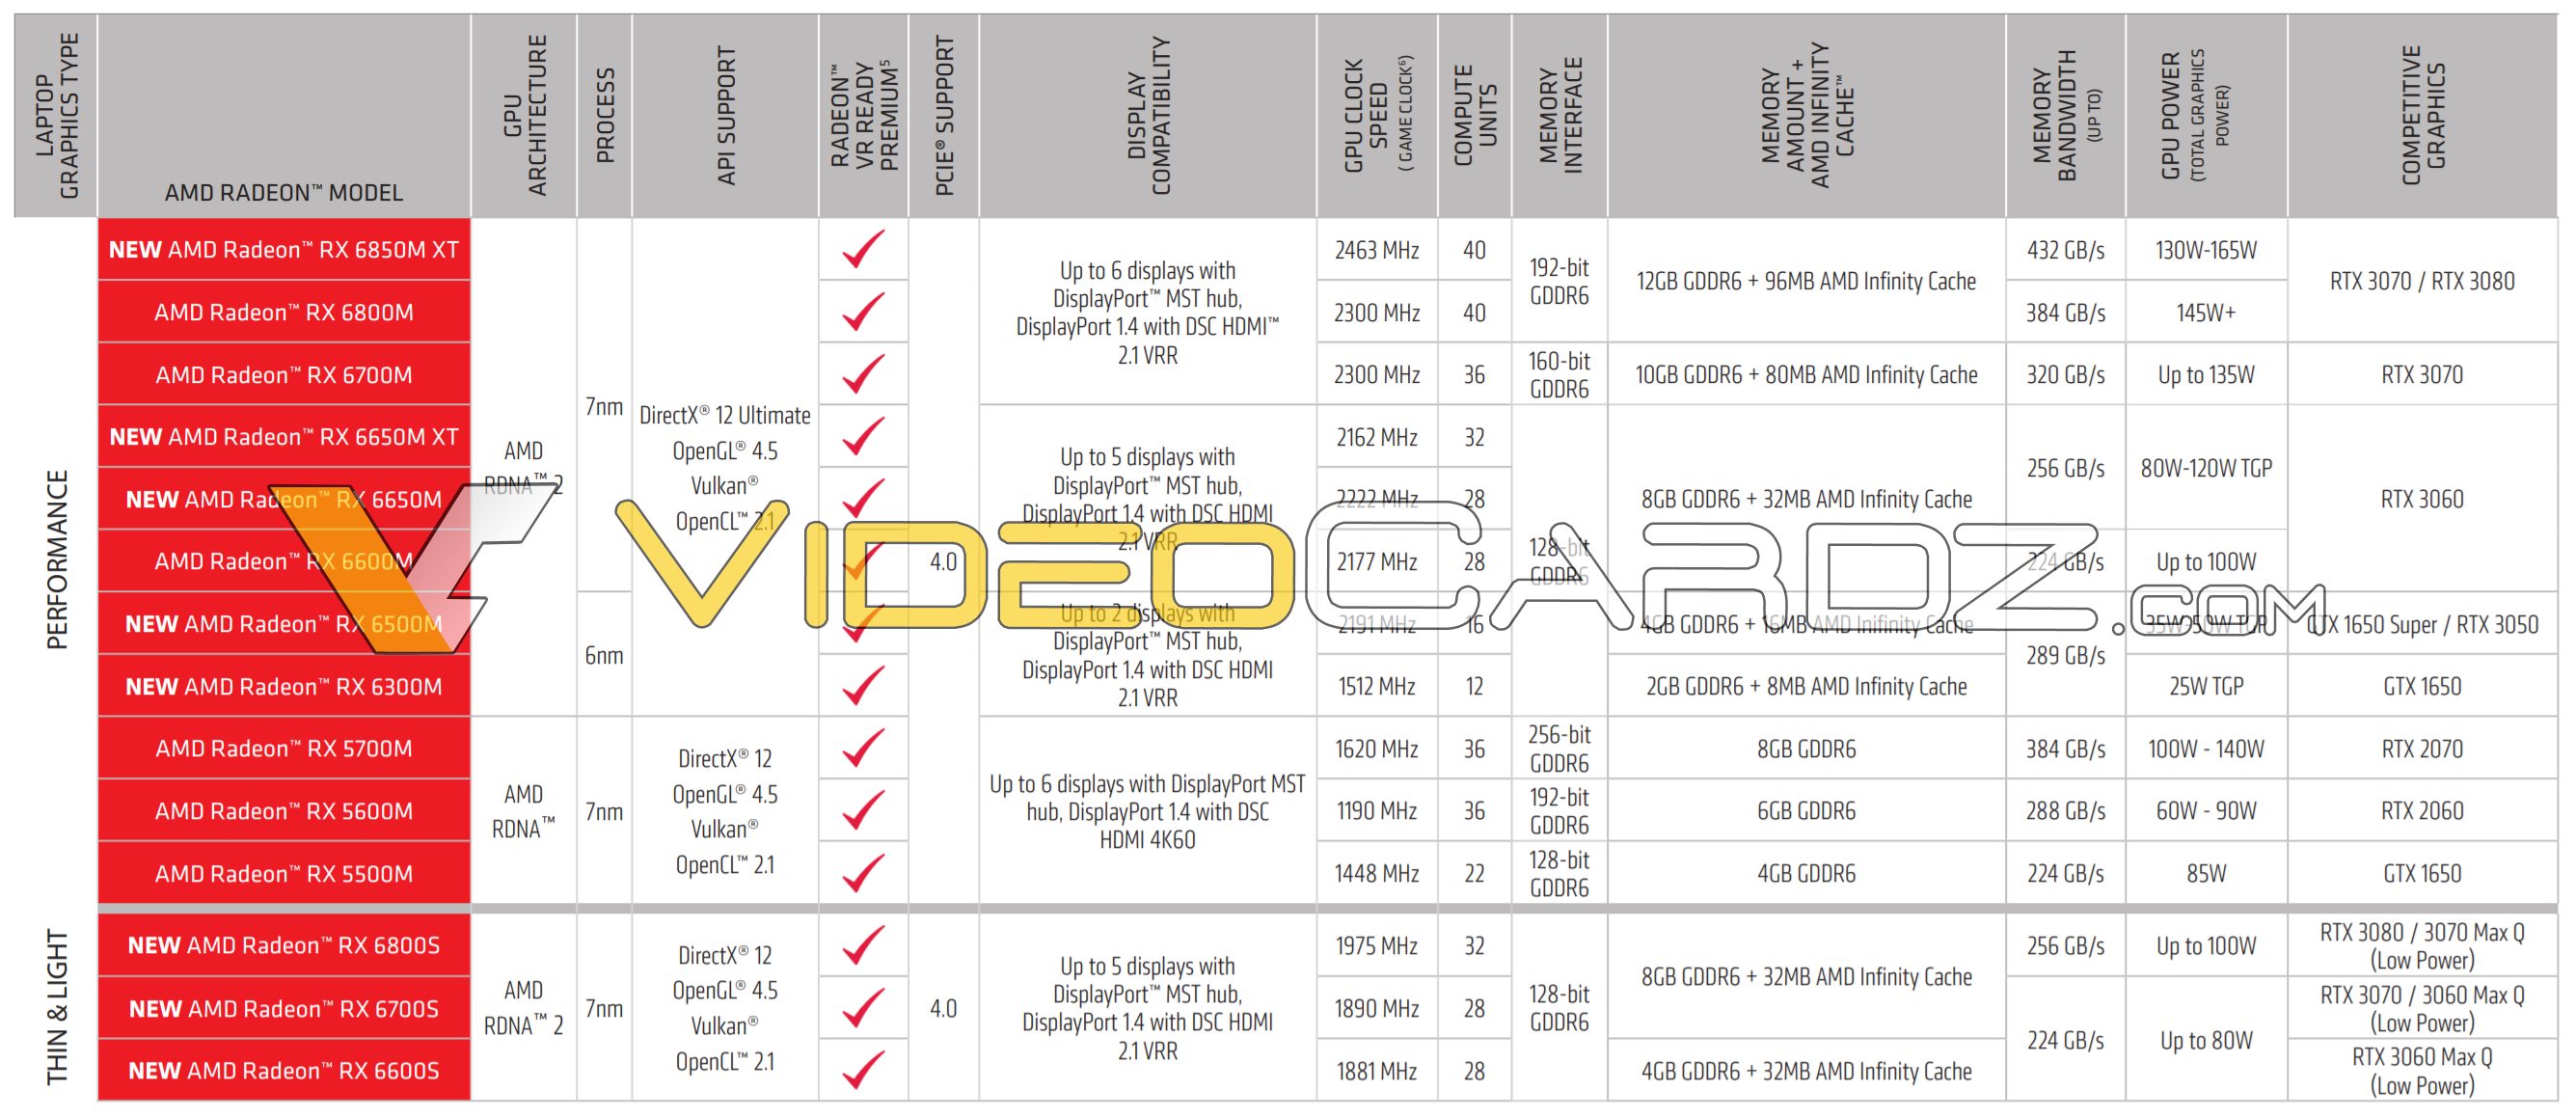 AMD Radeon RX 6000S Specs AMD’s Radeon RX 6850 XT, 6nm 6500M/6300M, and low power 6000S mobile GPUs specs leaked